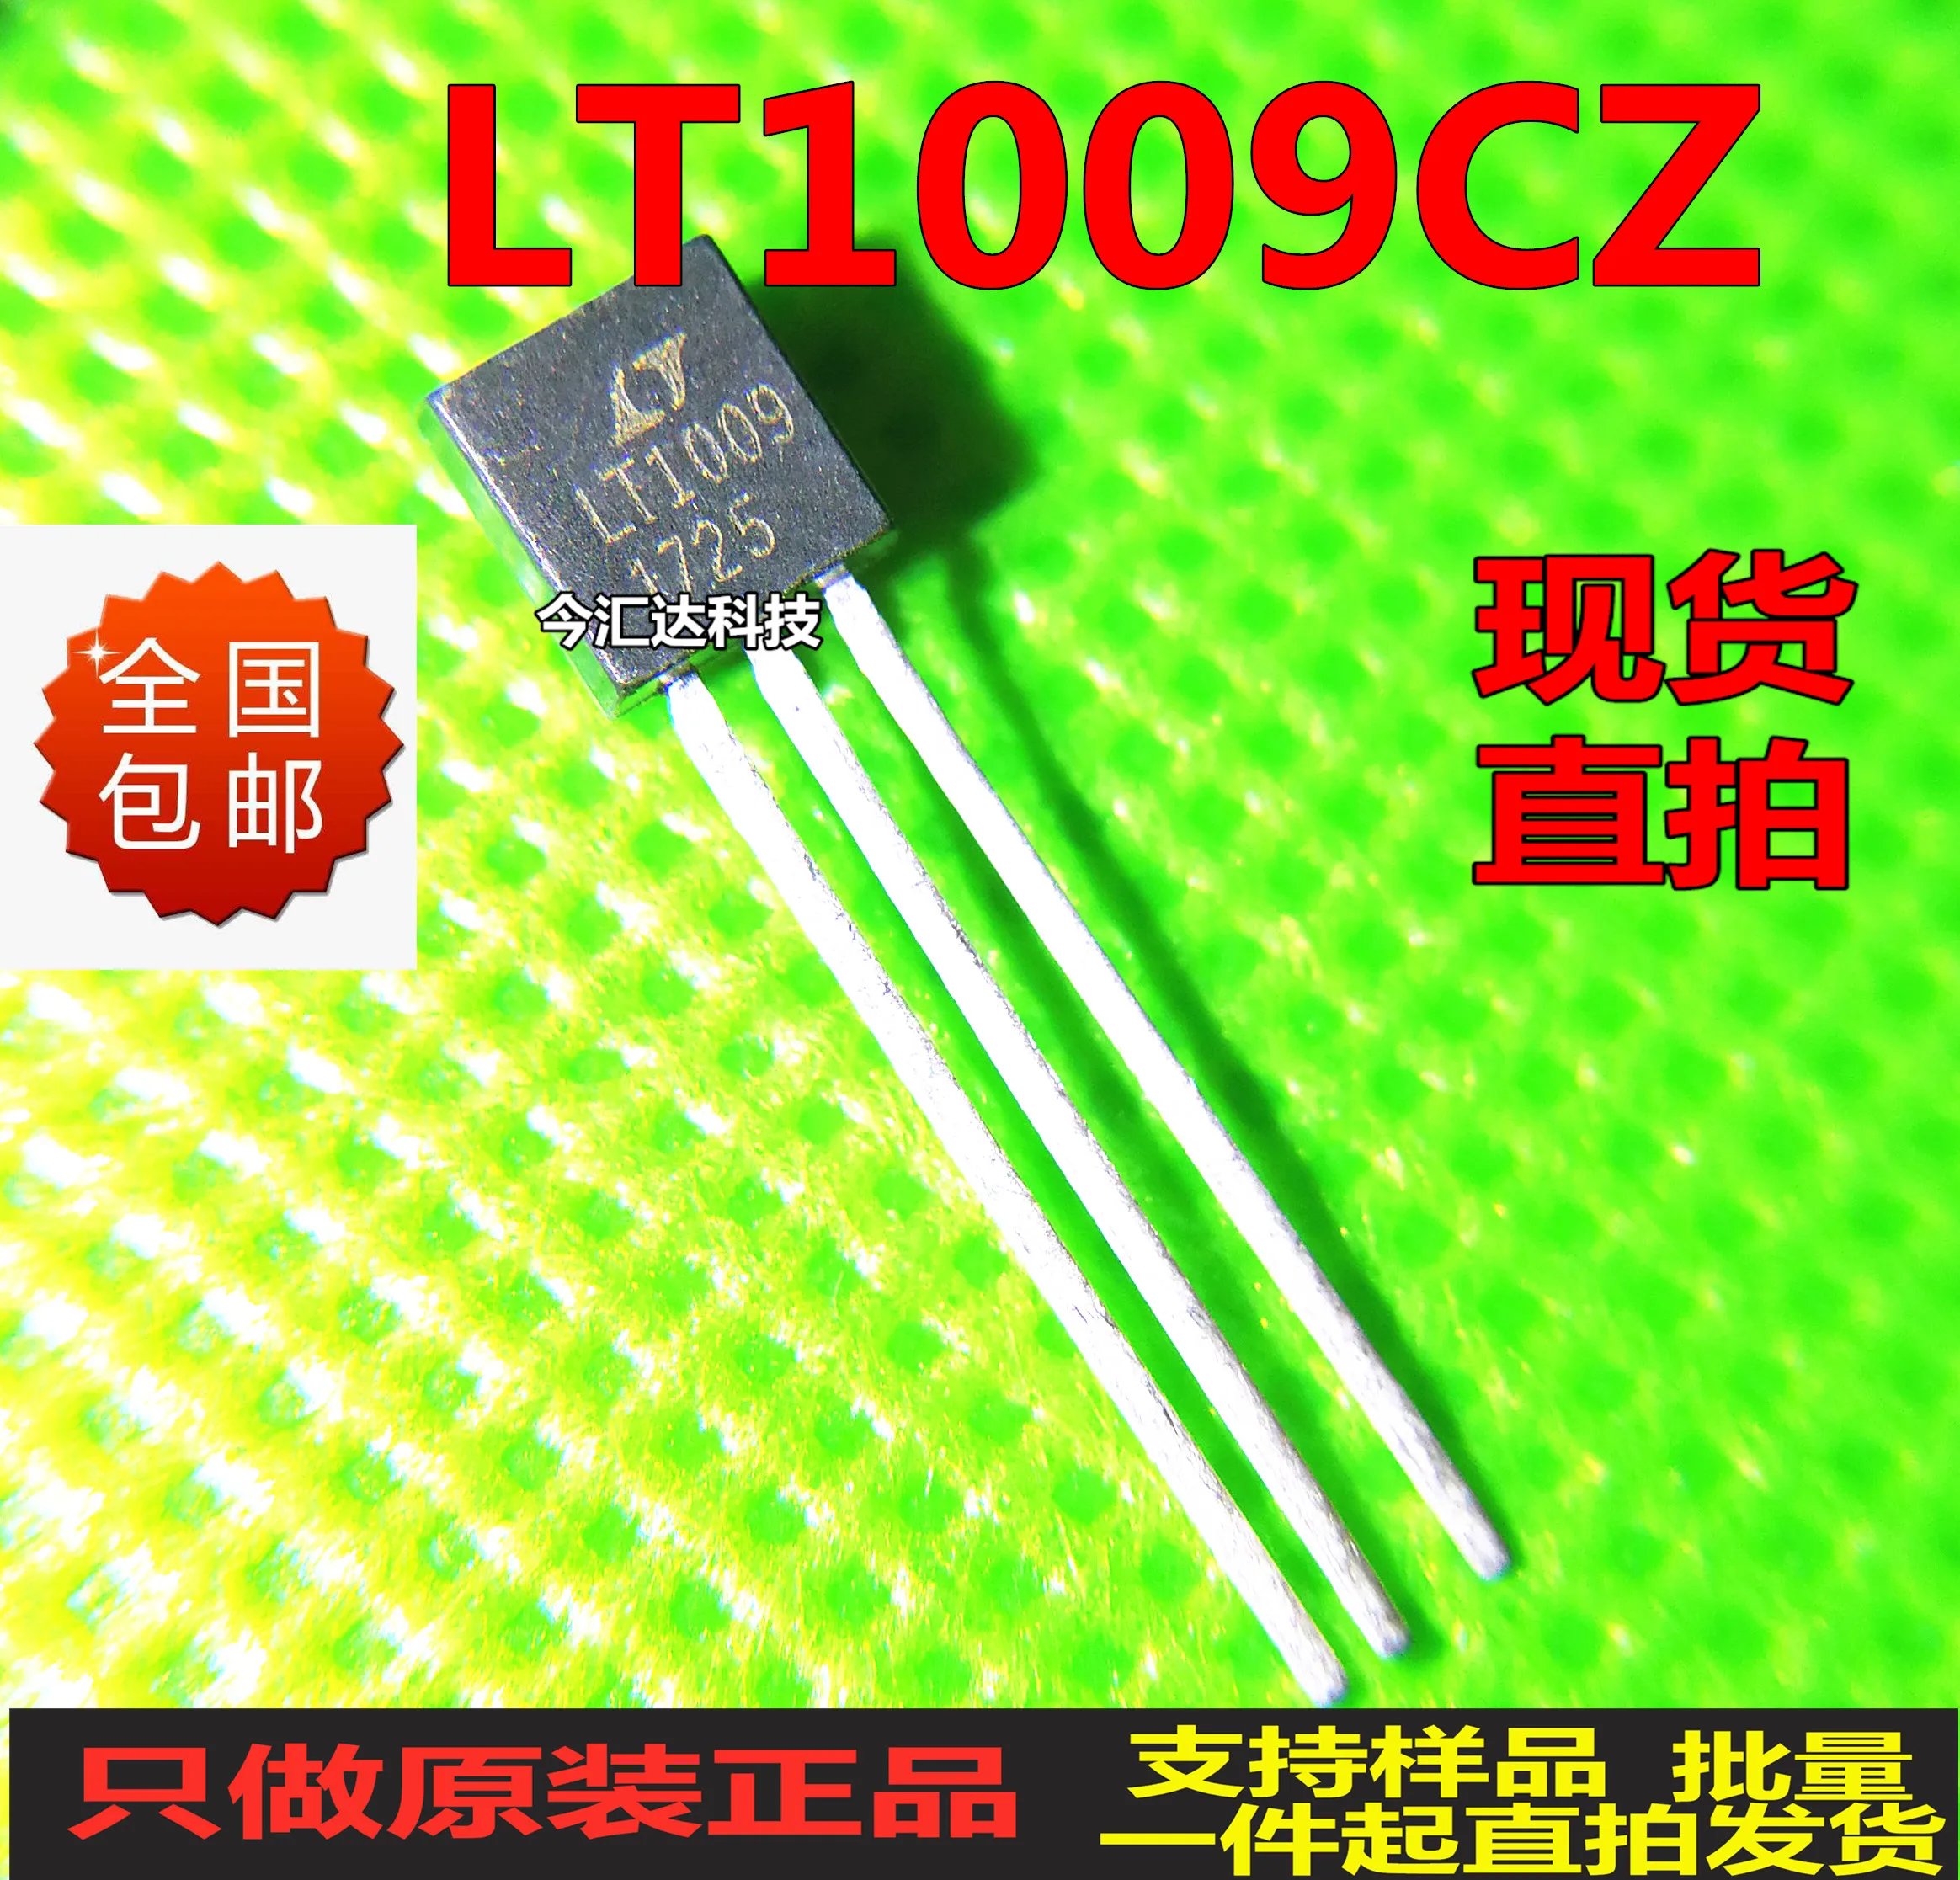 

30pcs original new 30pcs original new LT1009CZ LT1009 TO-92 2.5V voltage reference